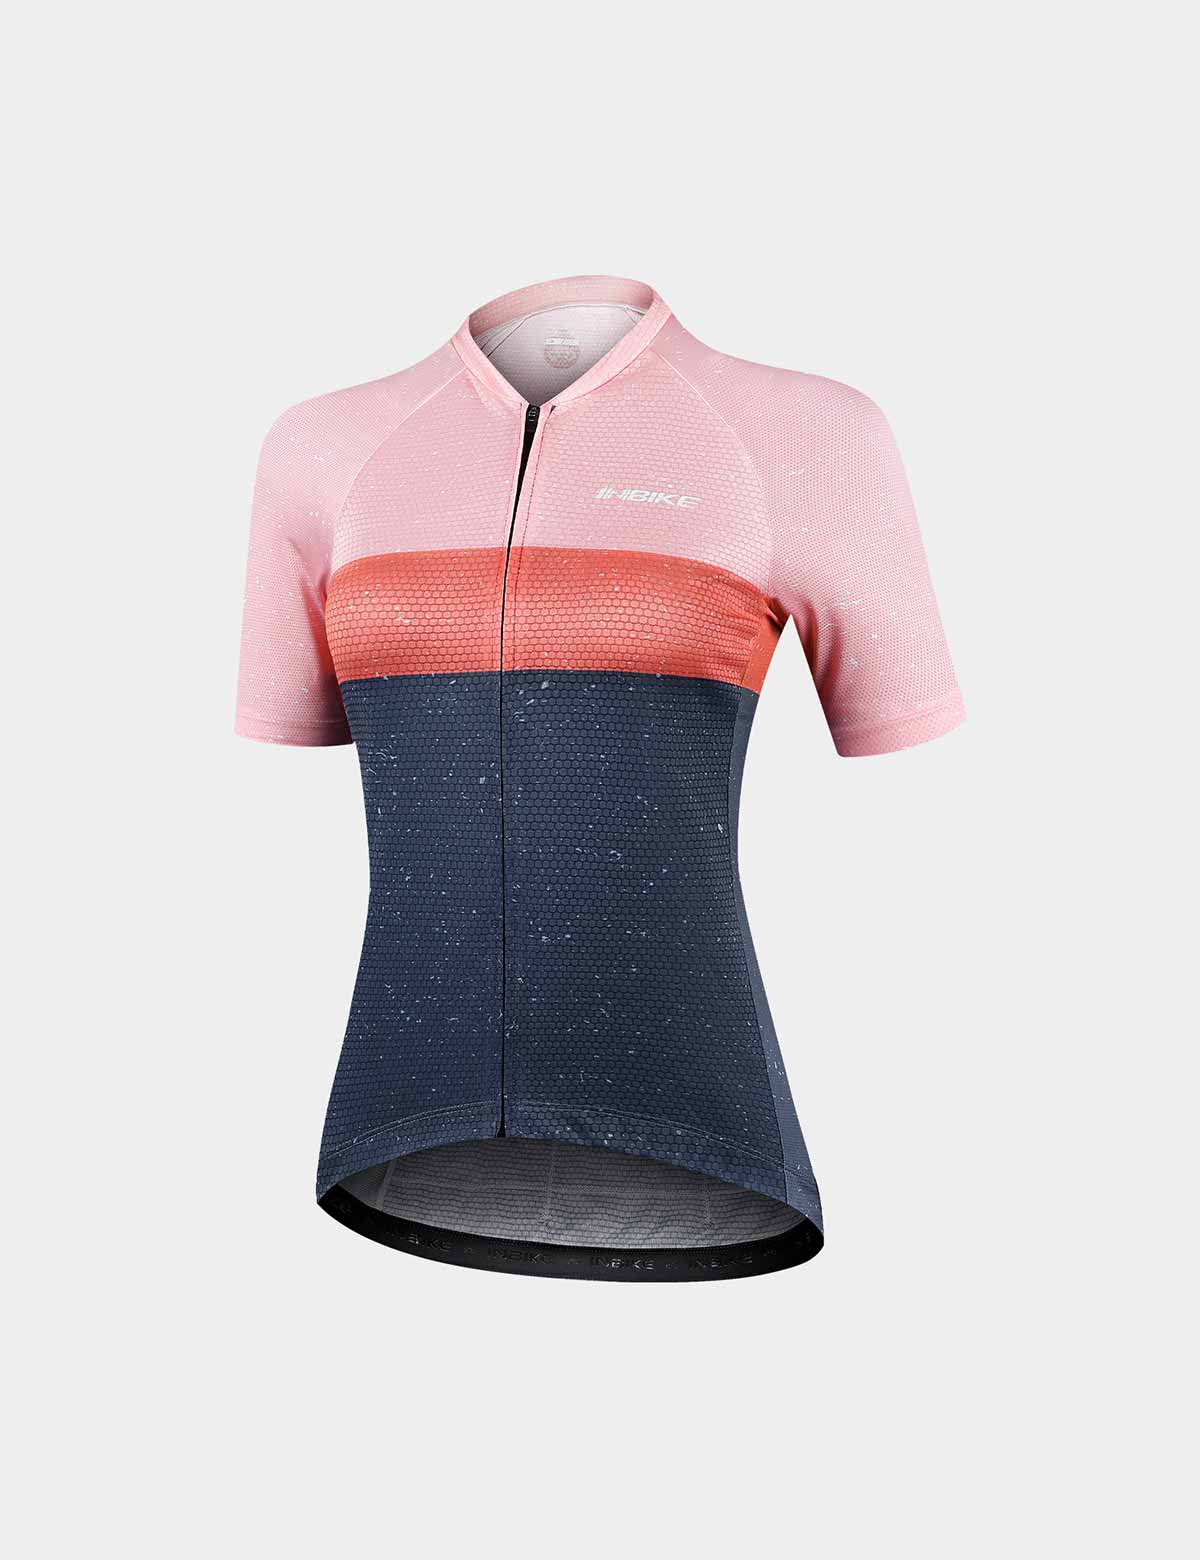 Hotlion Cat Paw Women's Cycling Jersey Short Sleeve Bike Shirt Tops MTB Bicycle Jersey 